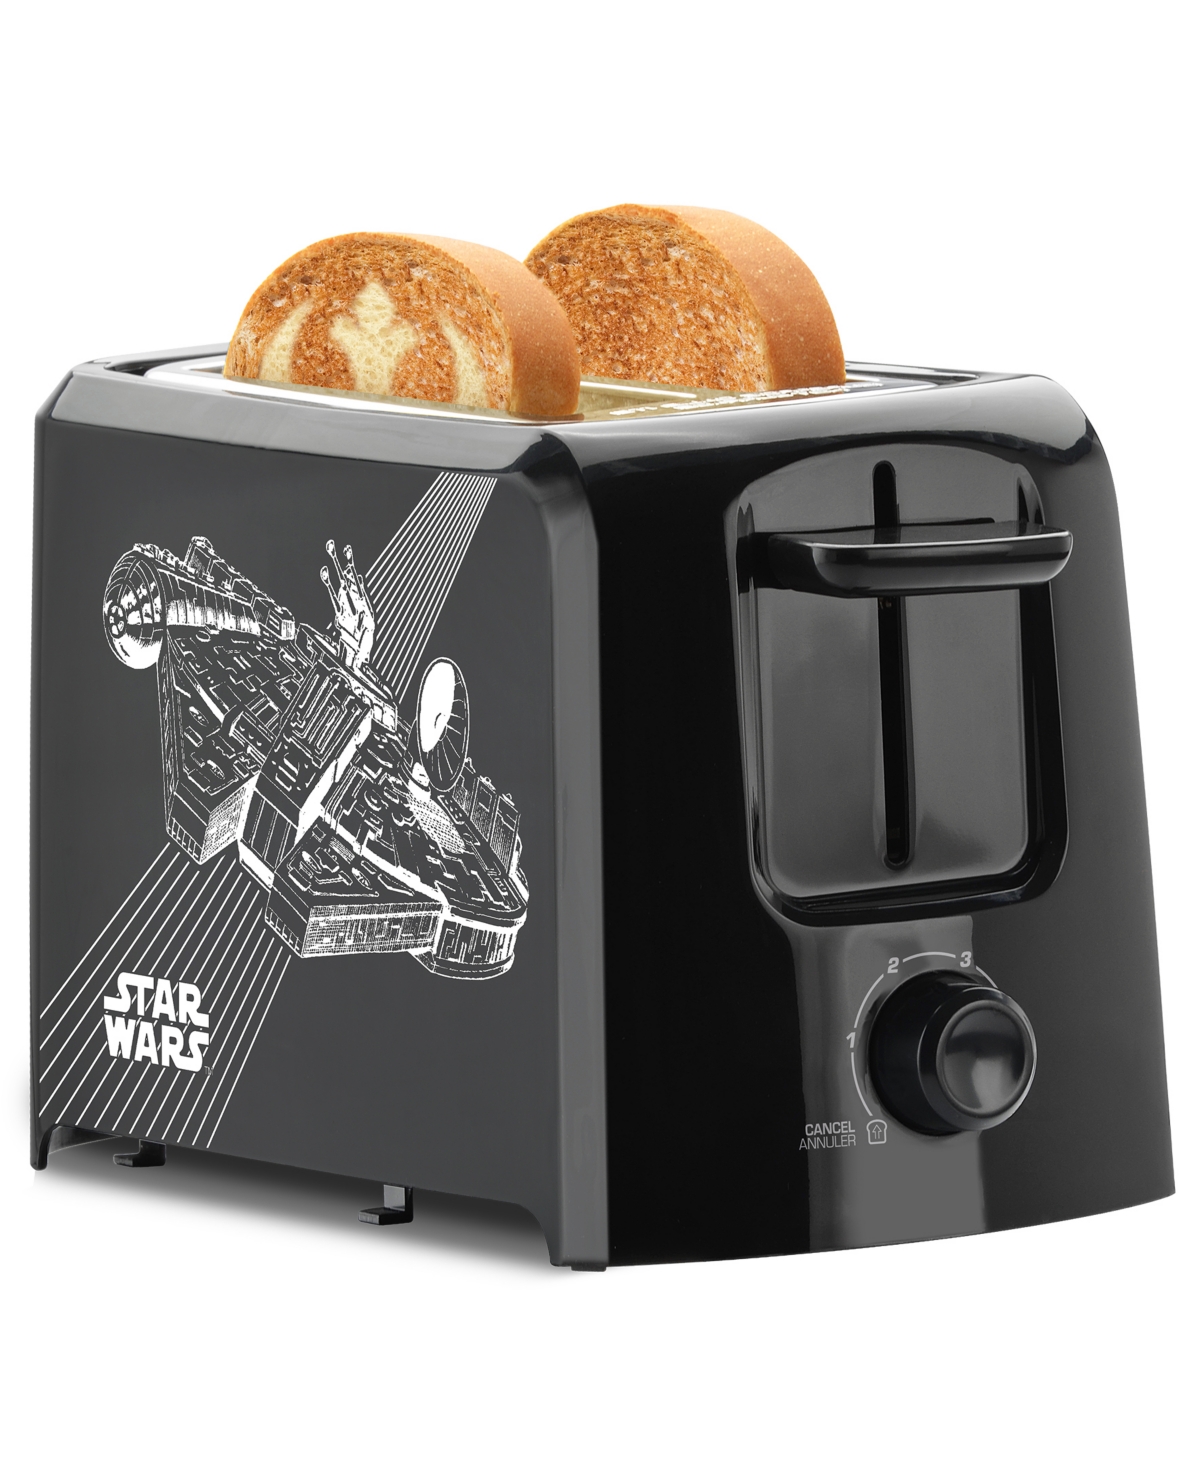 Star Wars 2 Slice Toaster In Silver